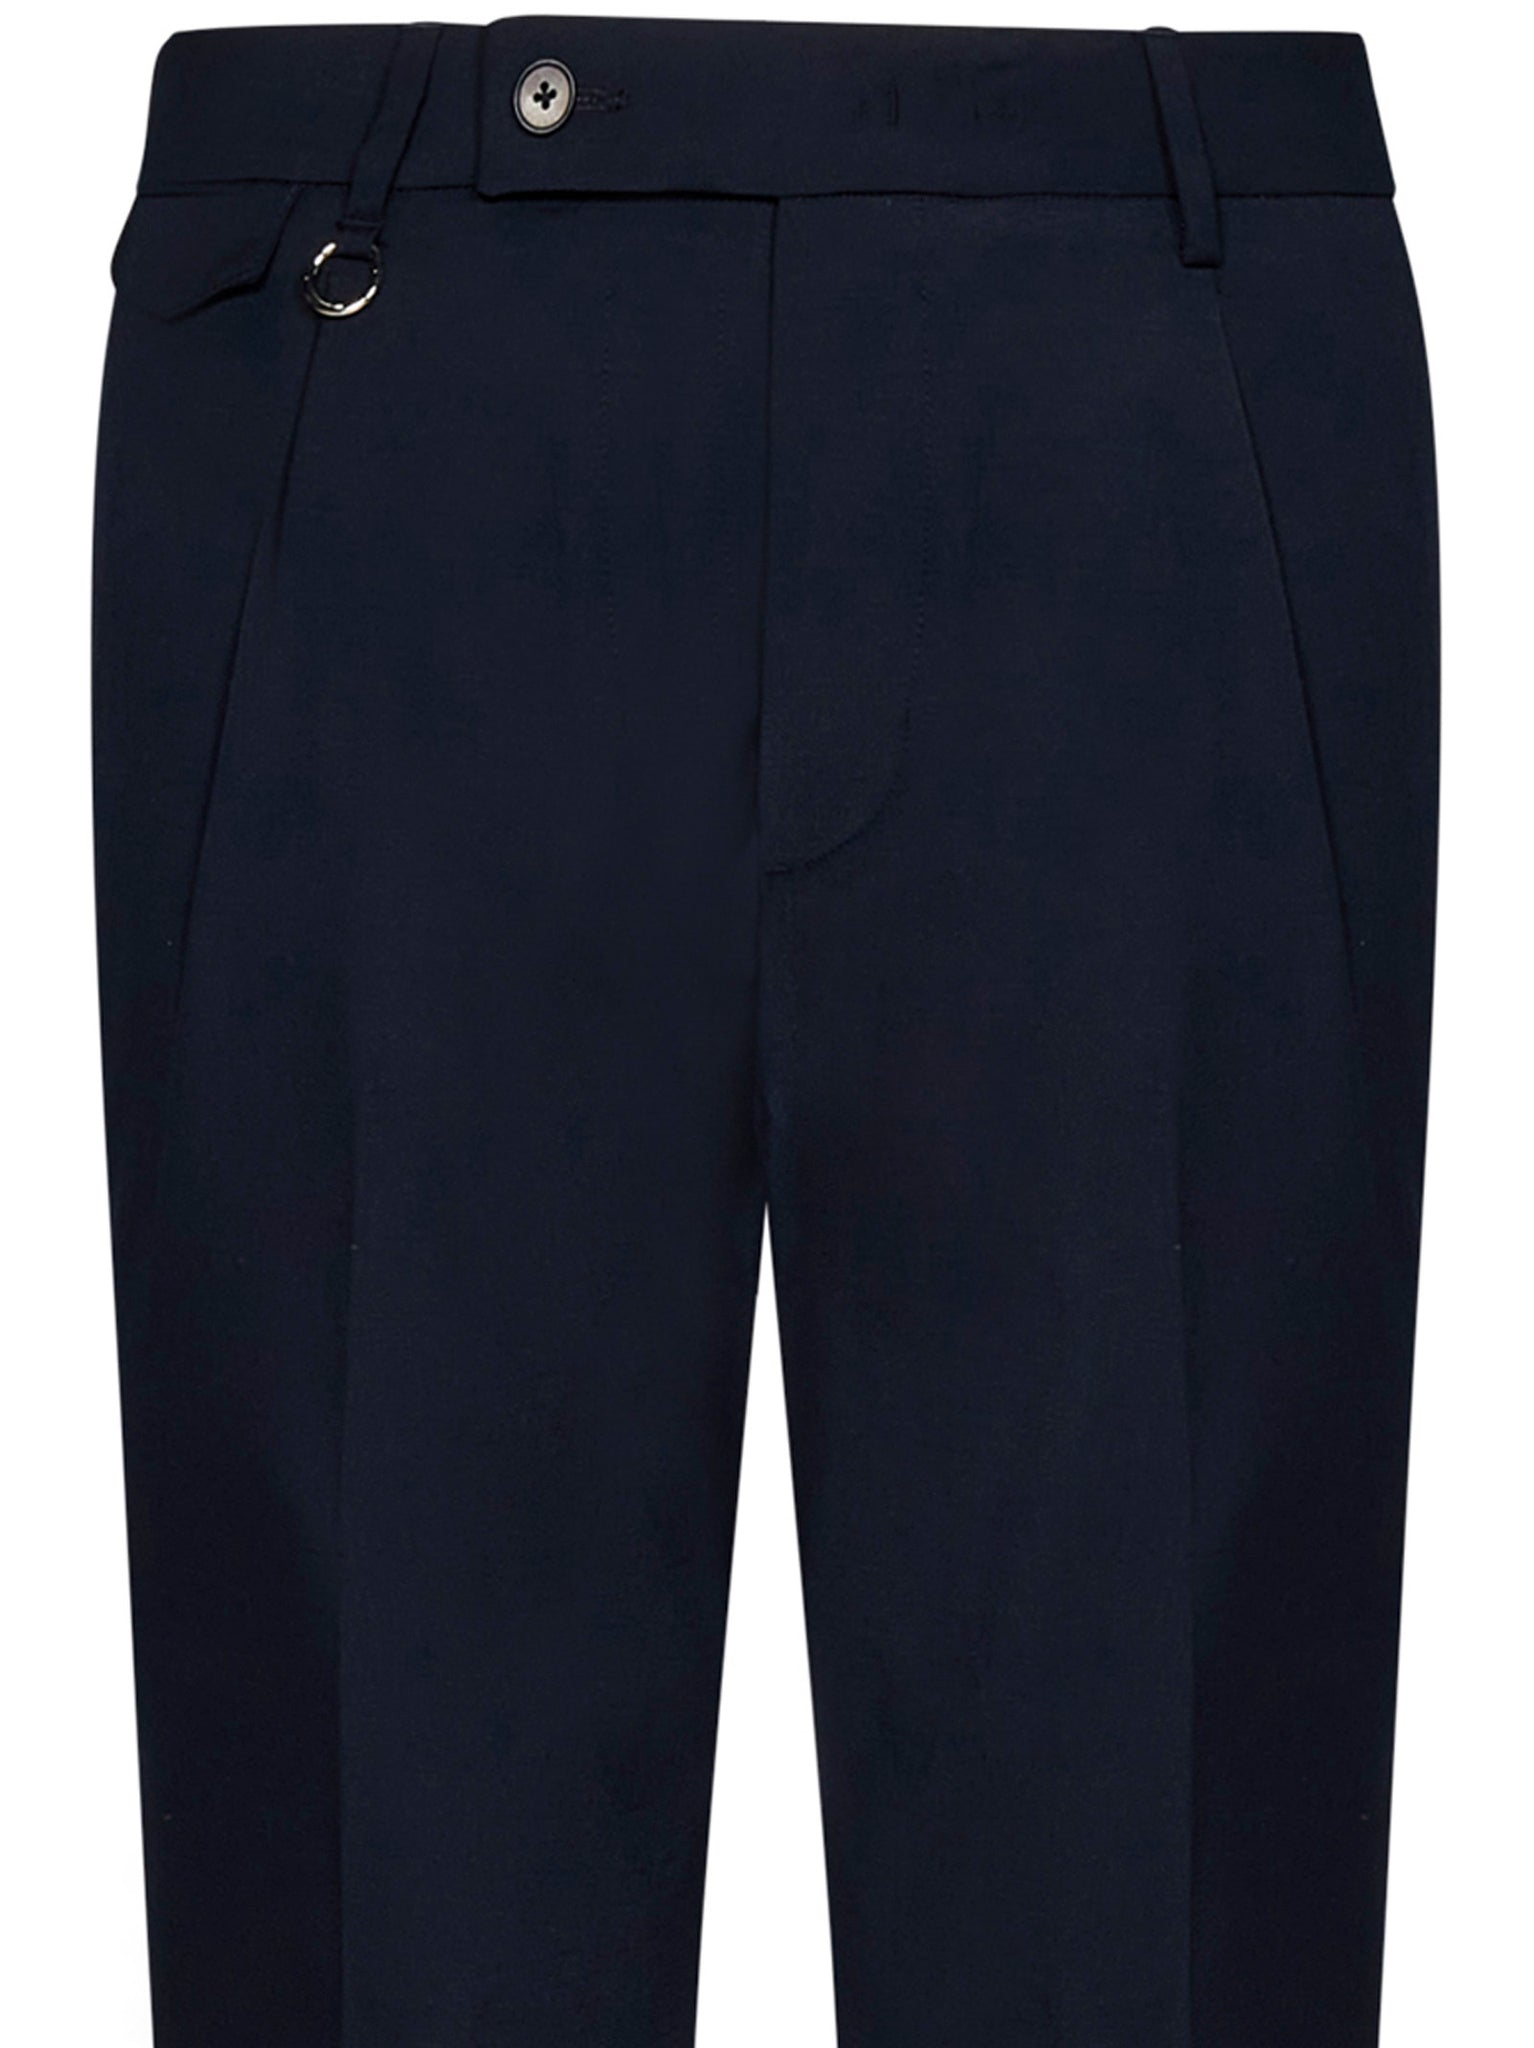 Pantalone in Lana con Pinces Golden Craft / Blu - Ideal Moda